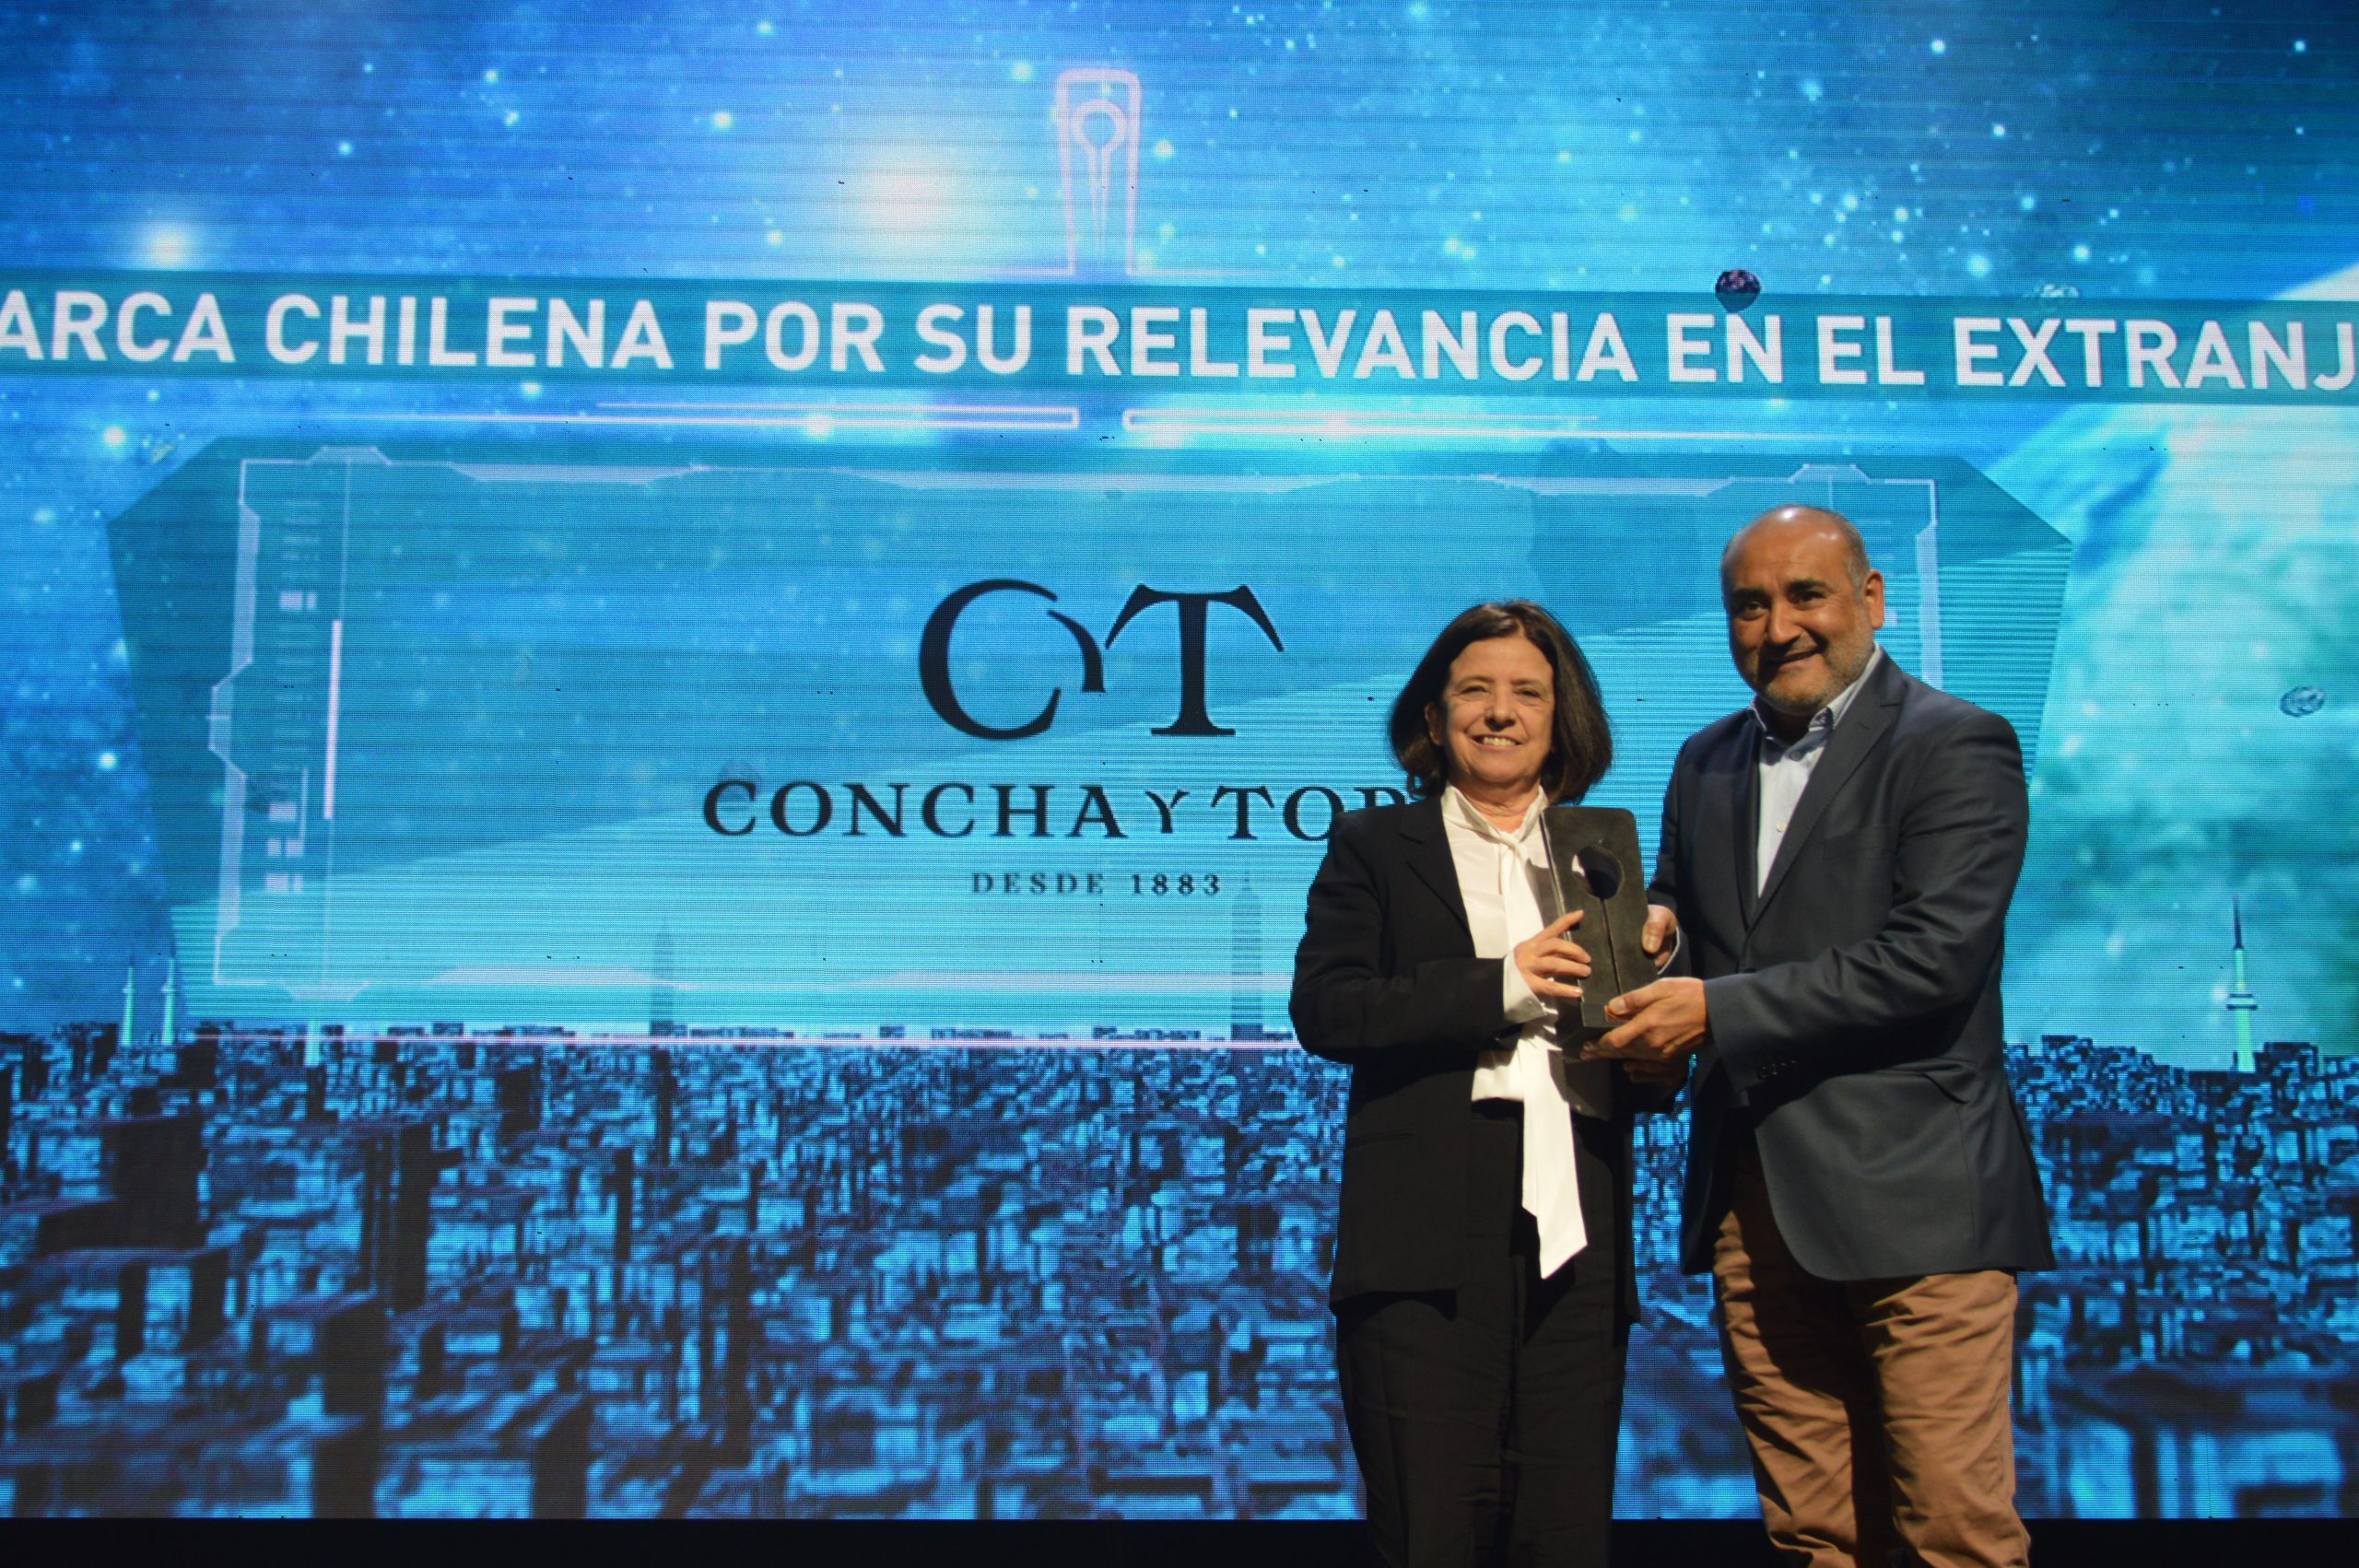 Concha y Toro is chosen &#8220;2019 Great Chilean Brand&#8221;